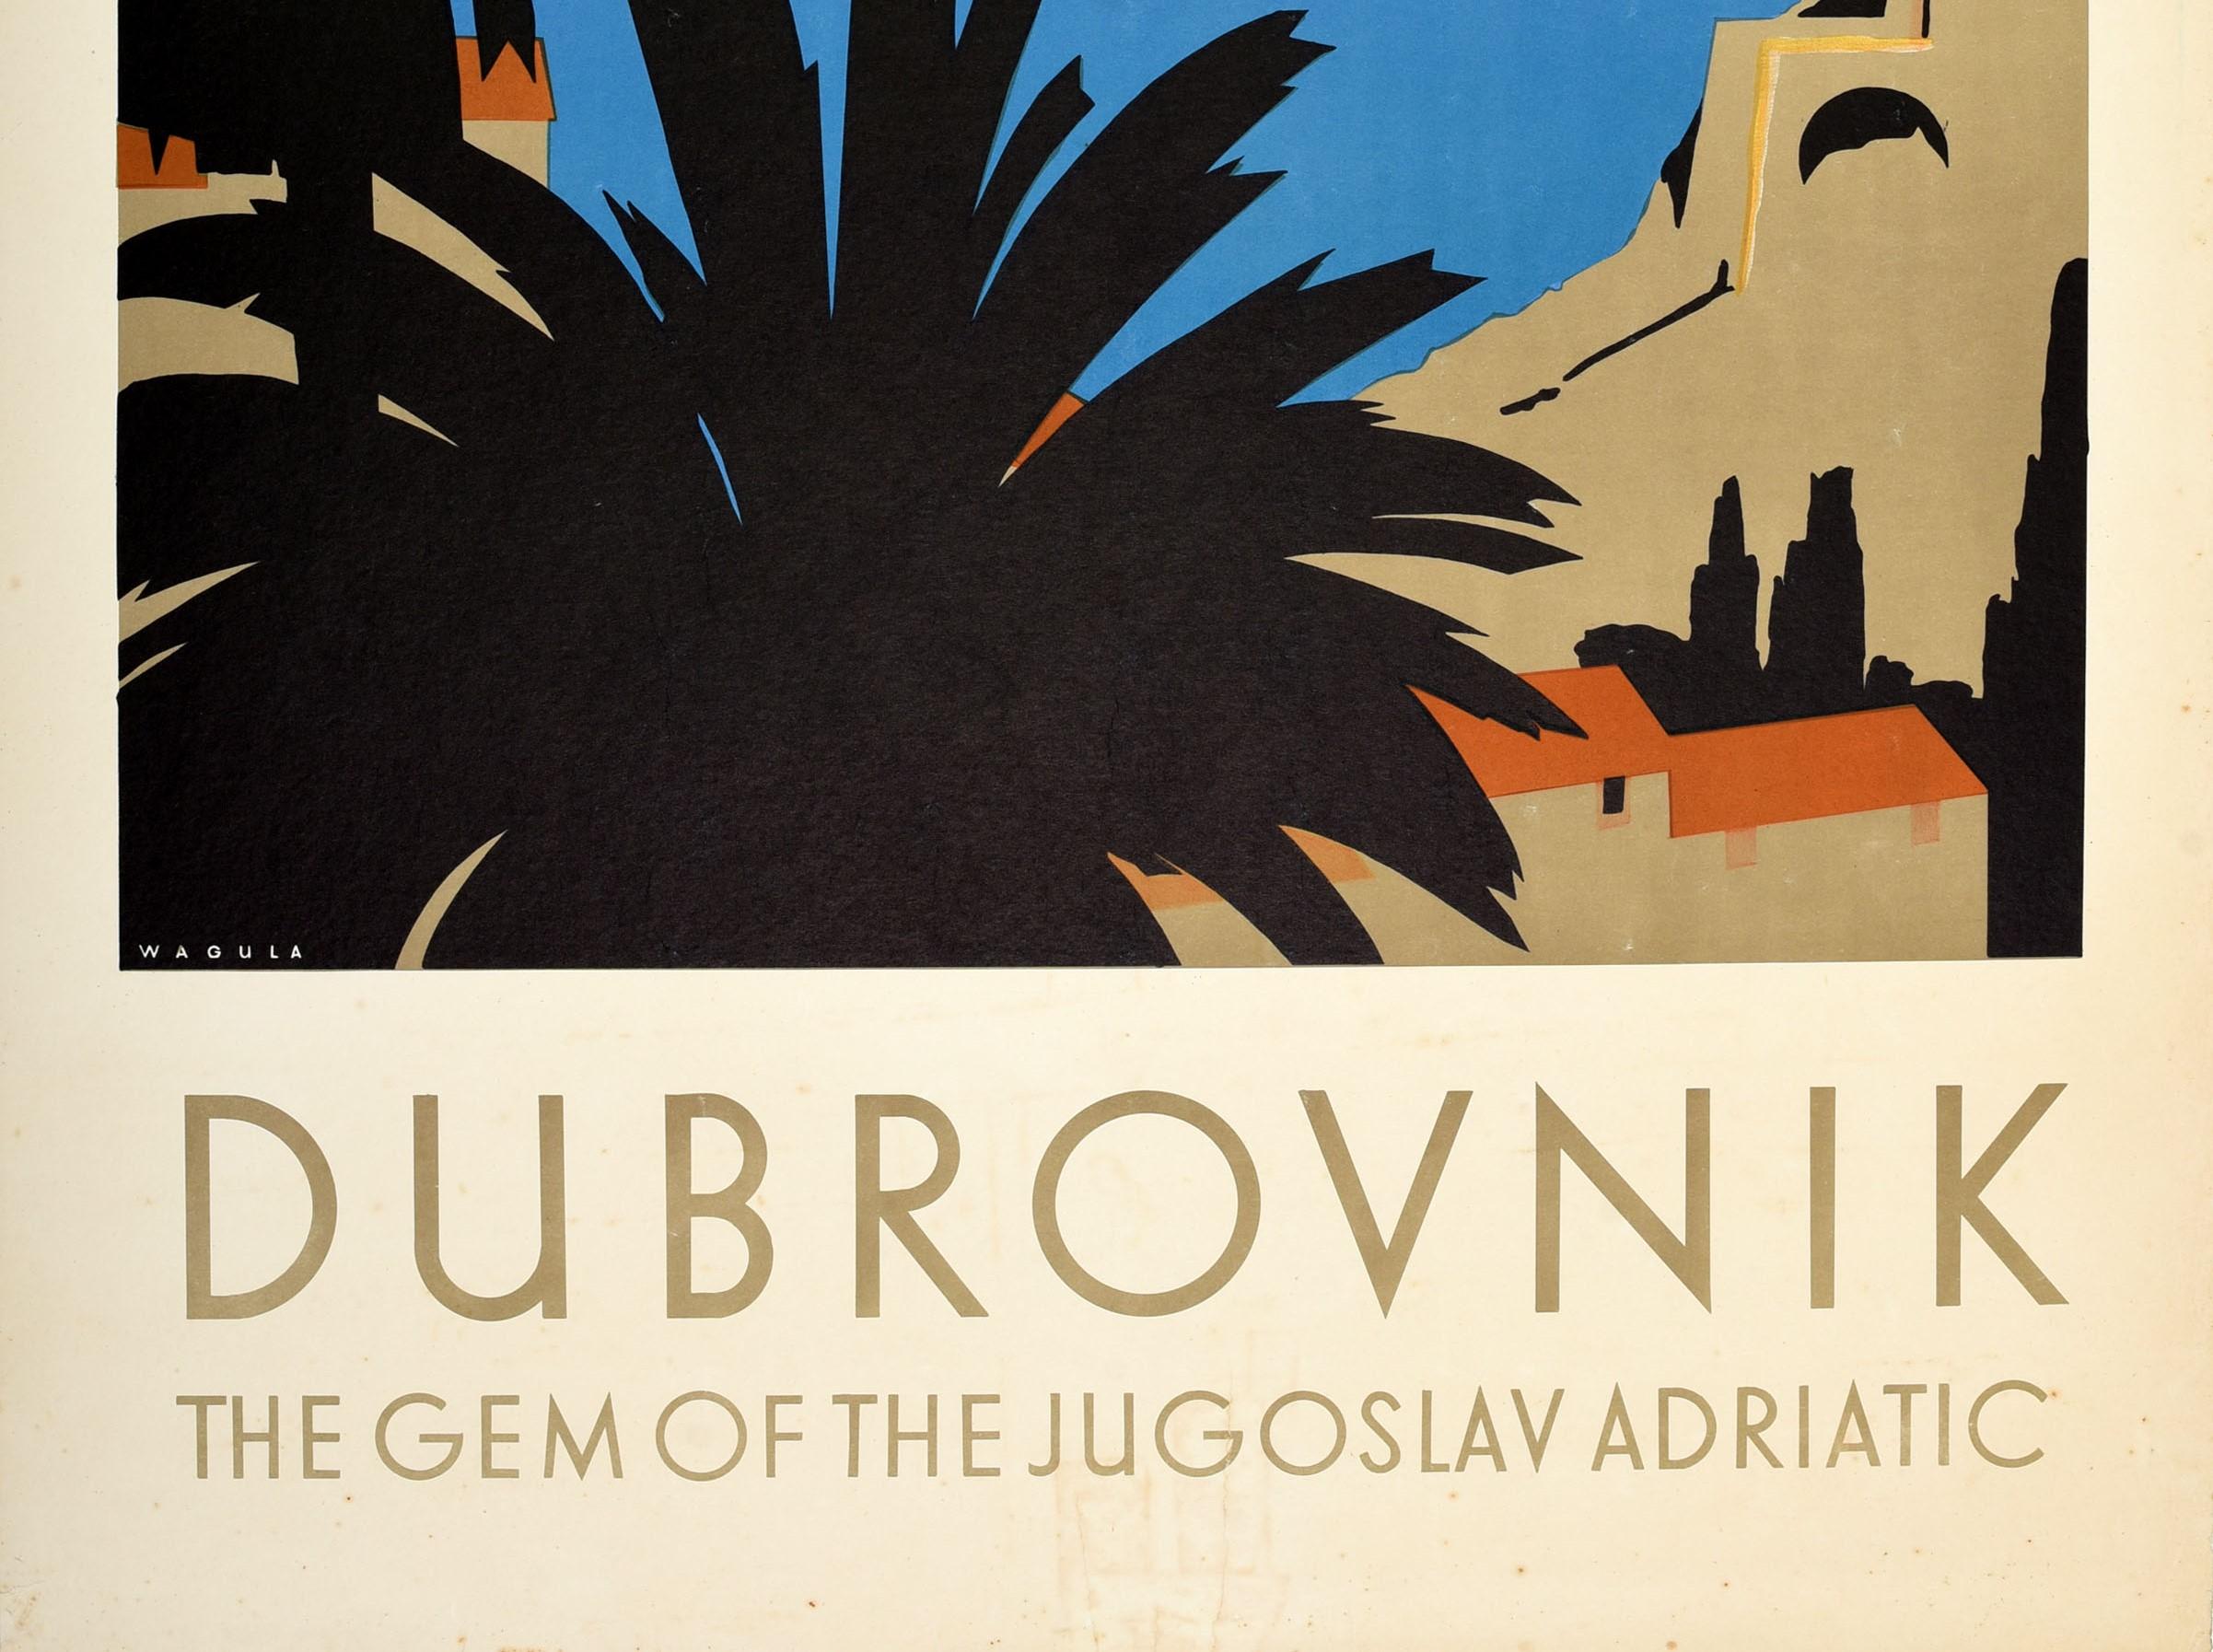 Art Deco Original Vintage Travel Poster Dubrovnik Jugoslavia Gem Of The Adriatic Coast For Sale